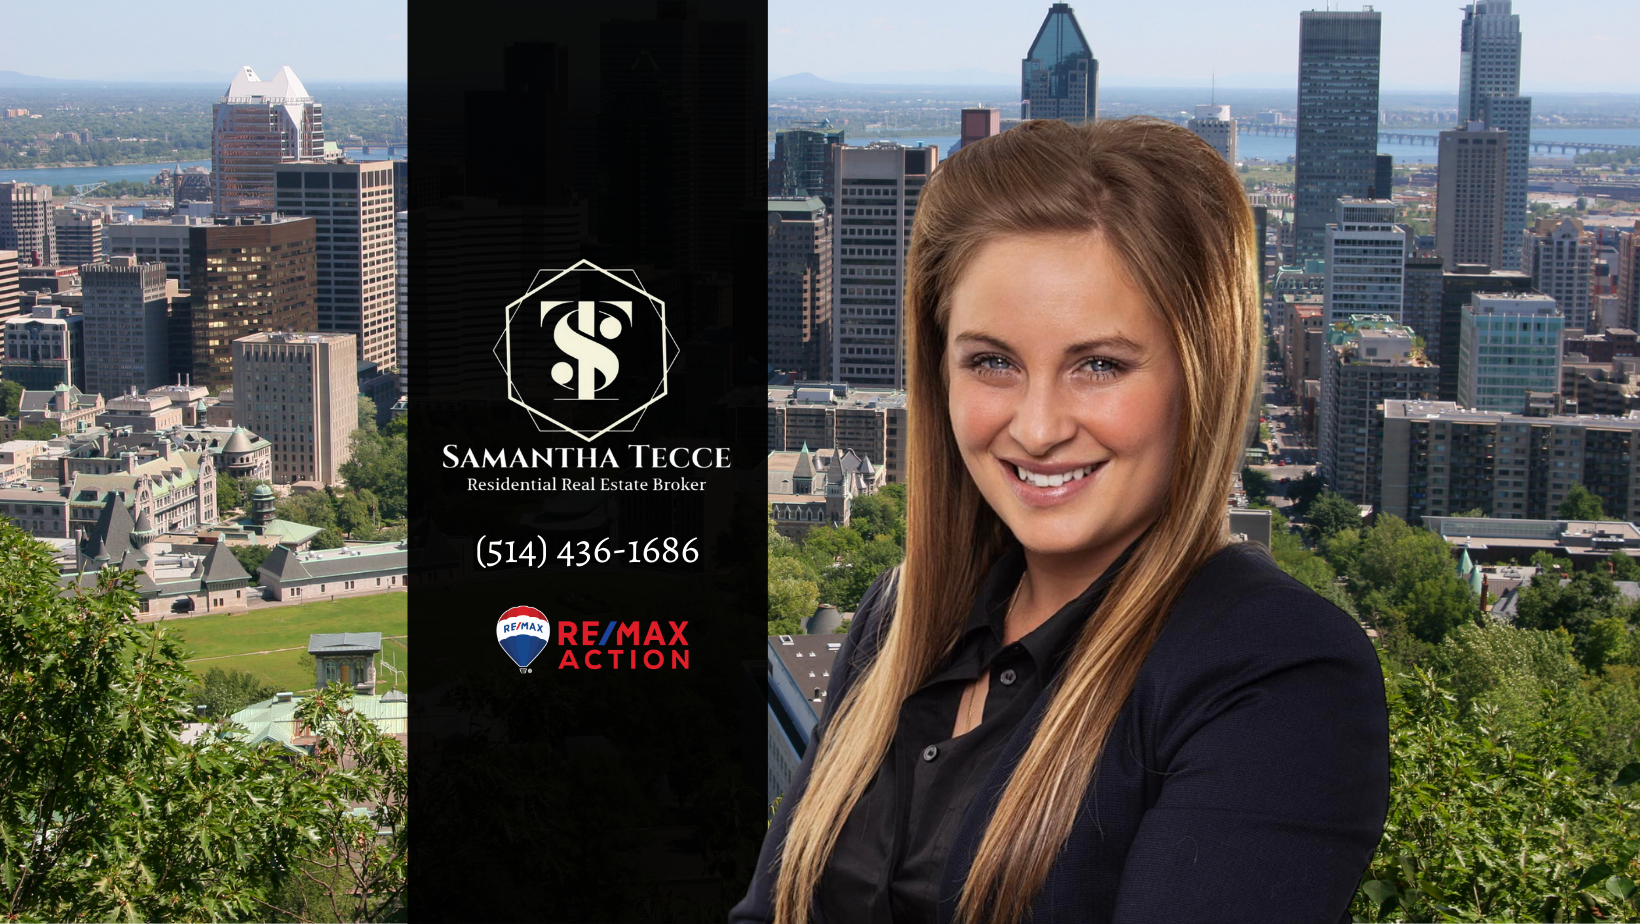 Samantha Tecce RE/MAX Real Estate Broker